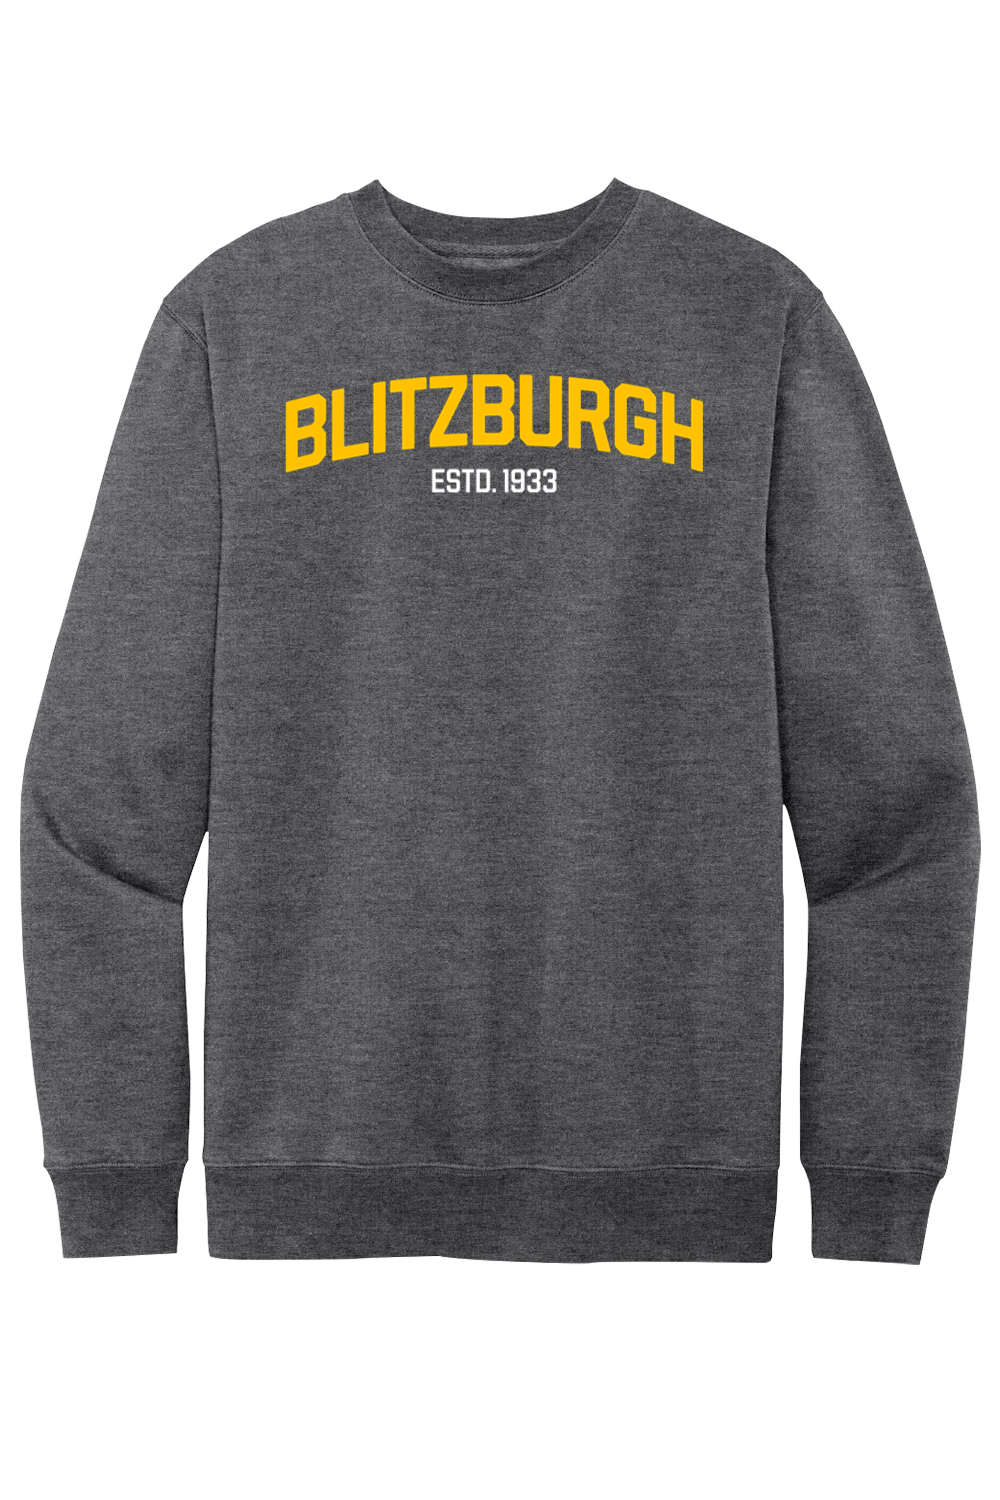 Blitzburgh Estd. 1933 - Fleece Crewneck Sweatshirt - Yinzylvania